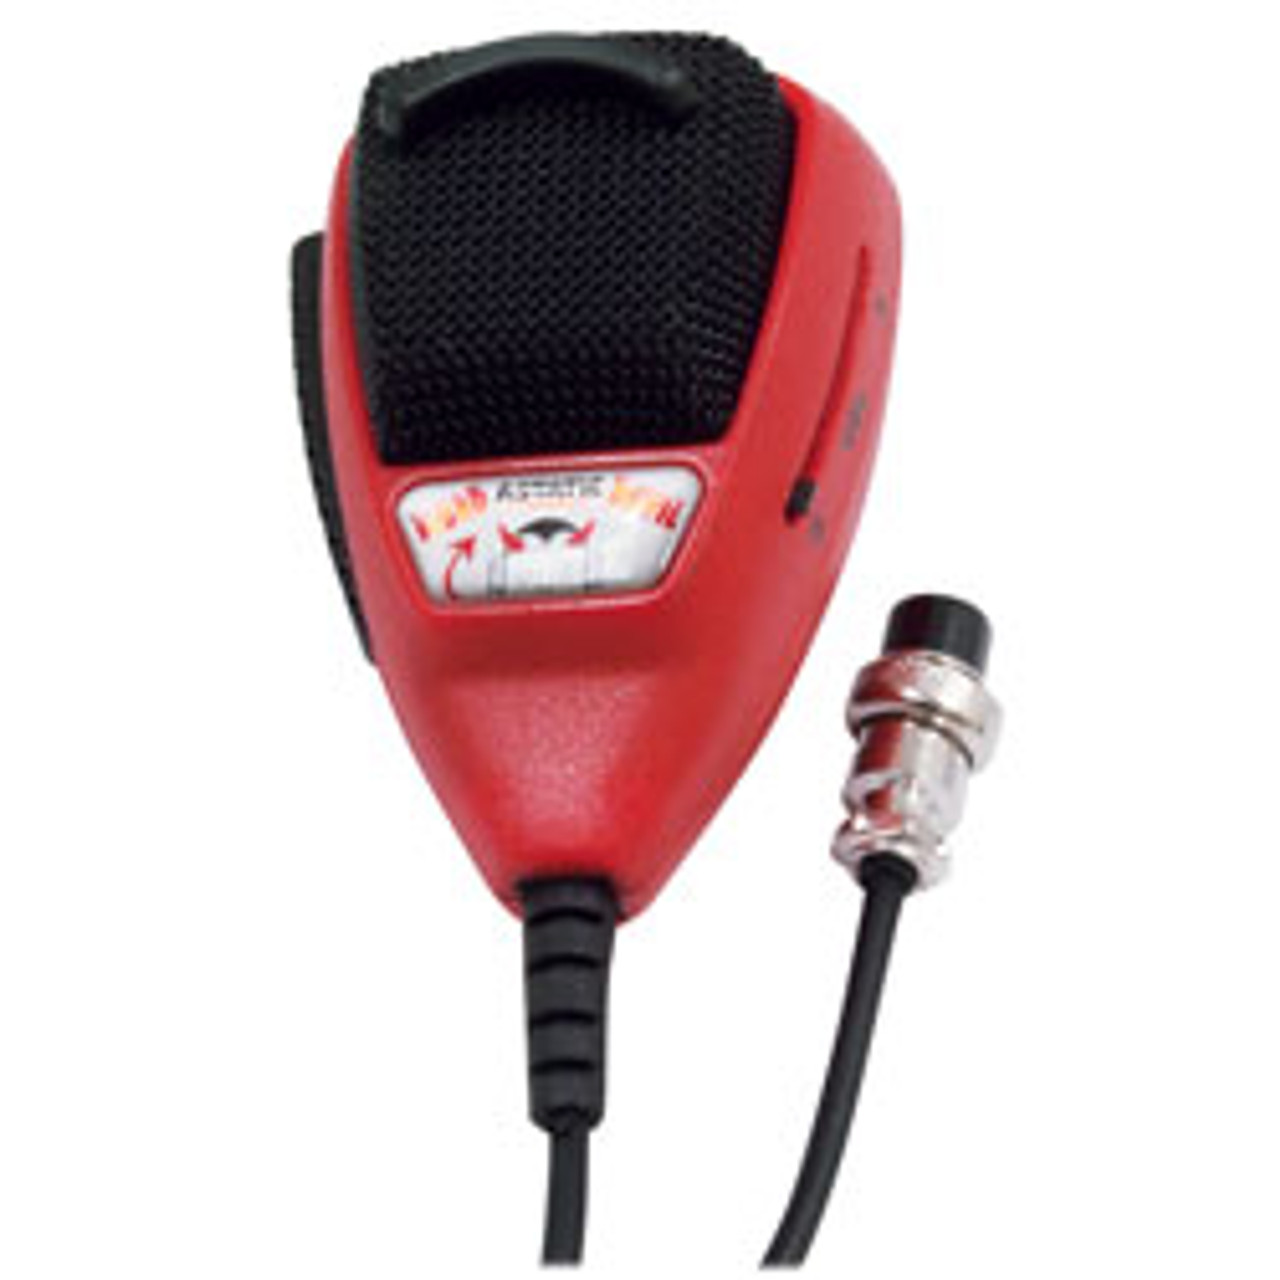 Astatic - RD104E Road Devil Amplified 4-Pin CB Microphone